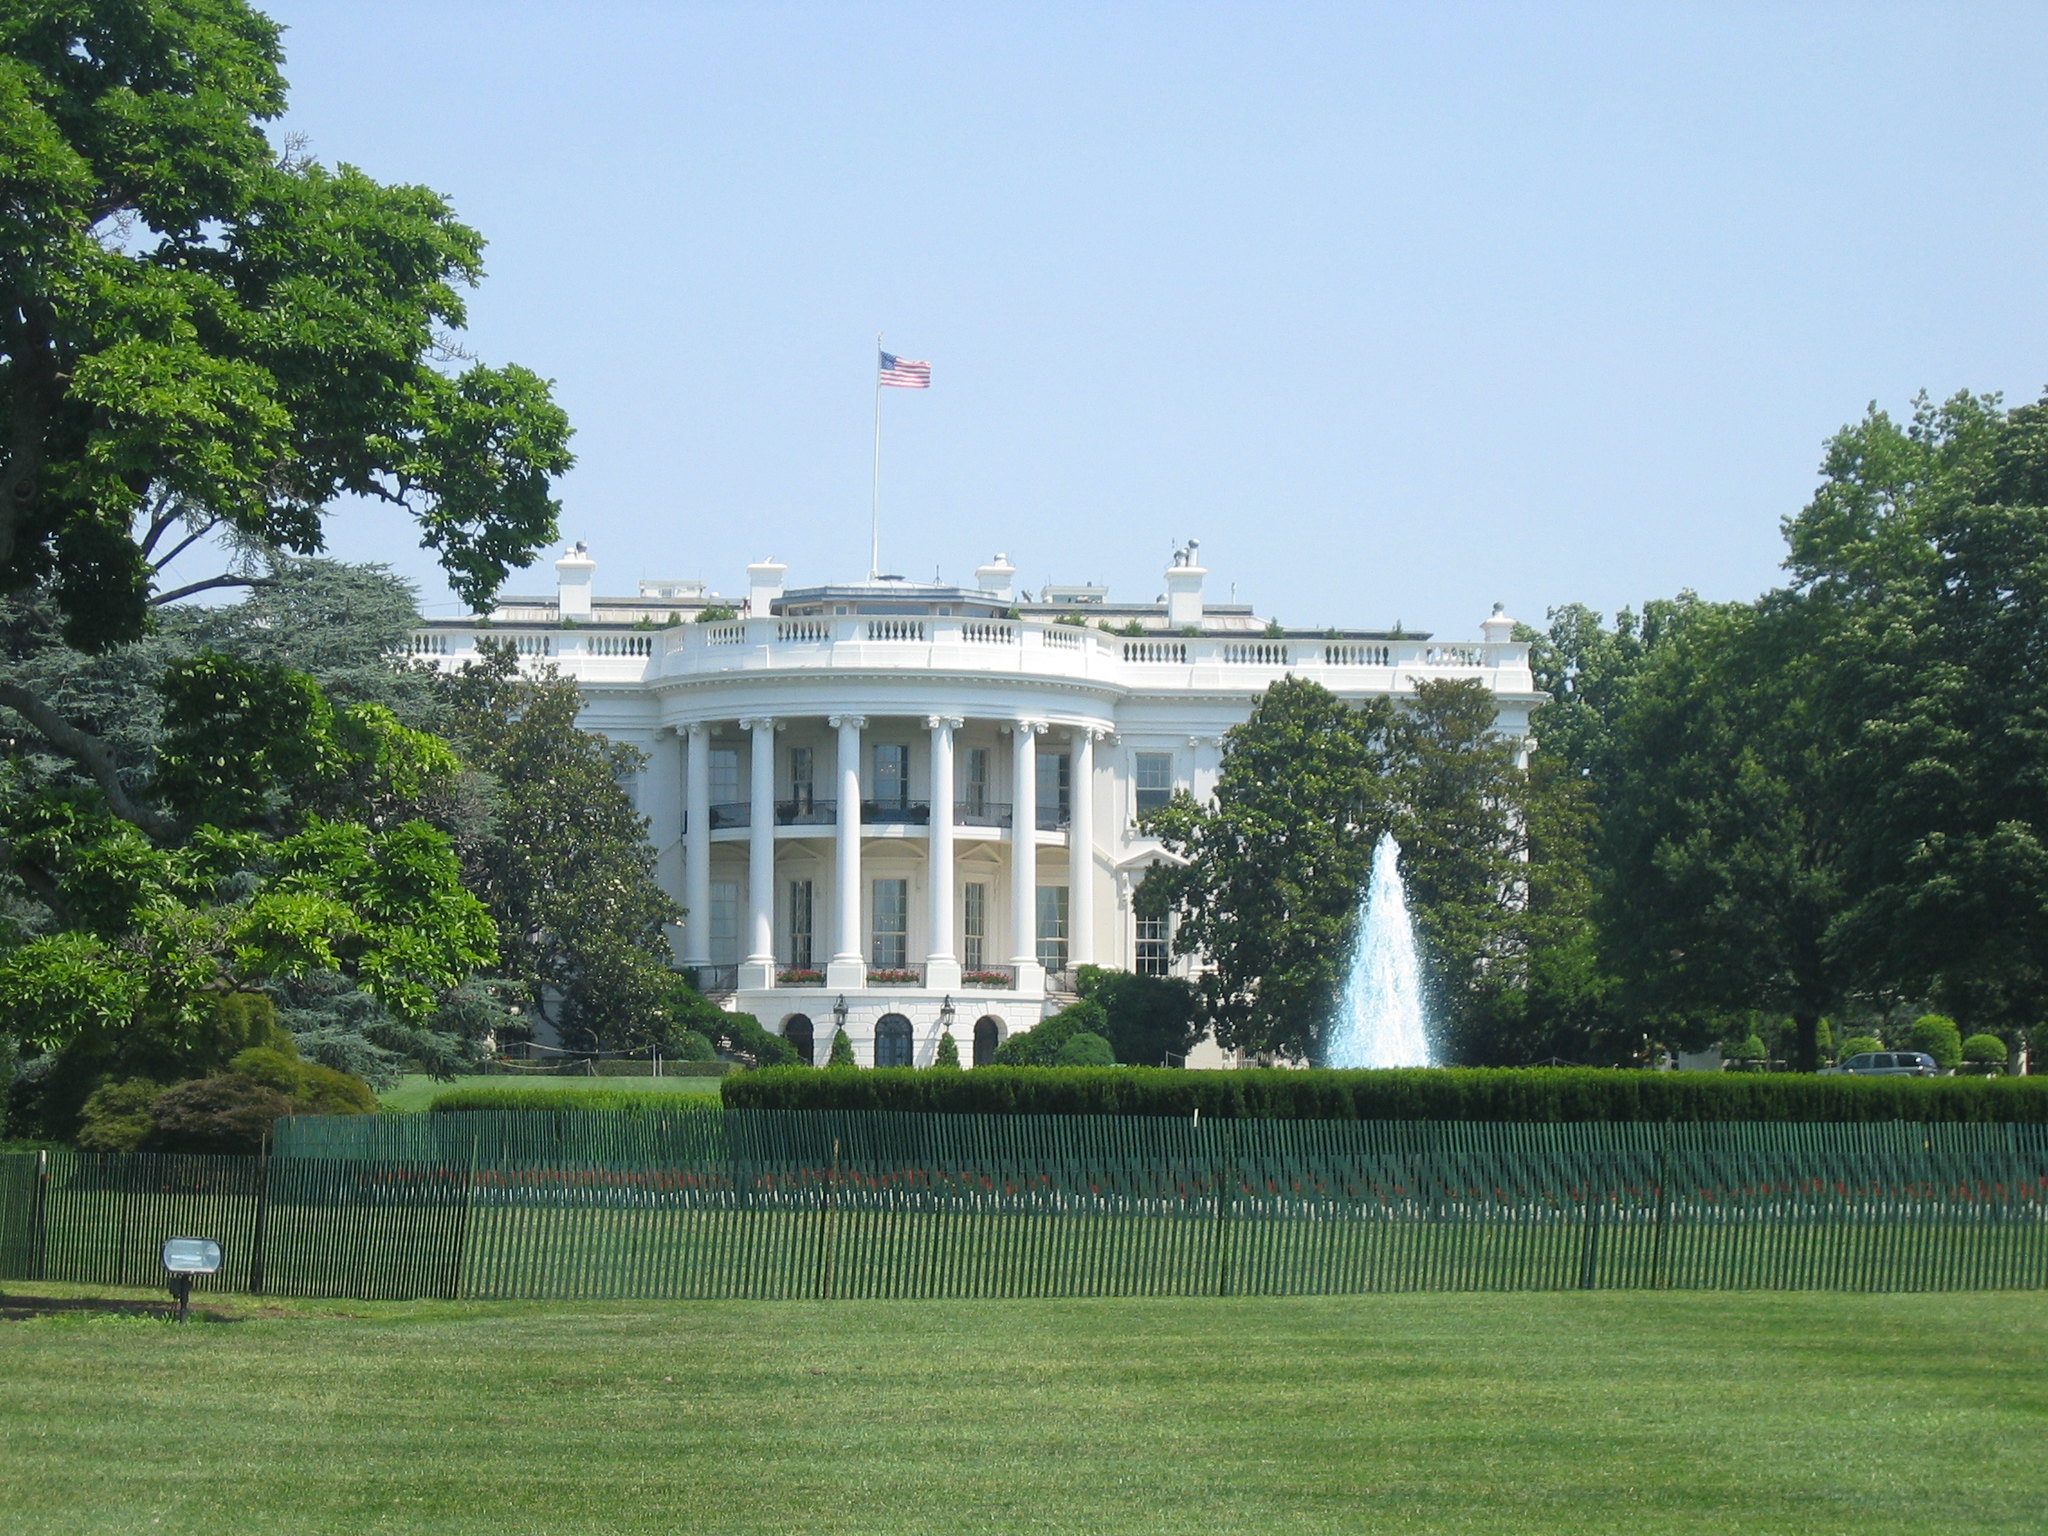 "Weißes Haus in Washington D.C., USA" by "Sebastian Fuss" flickr.com (CC BY-SA 2.0)